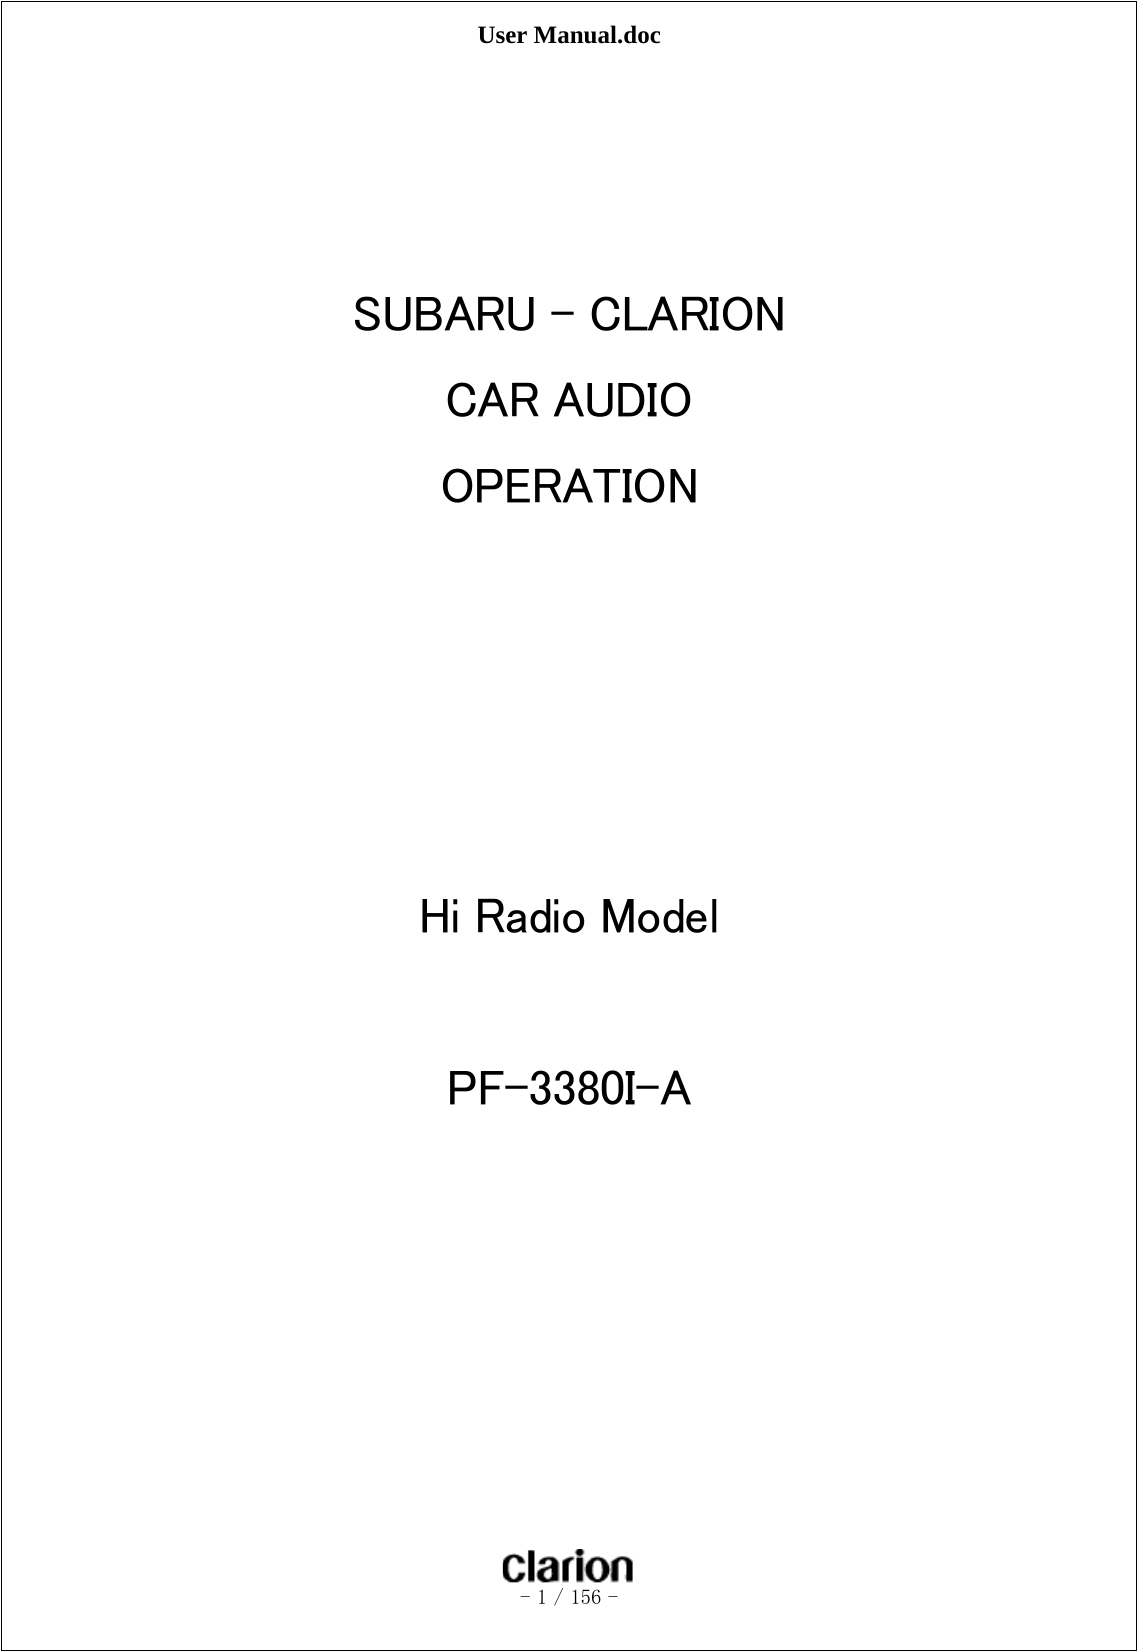 User Manual.doc   - 1 / 156 -         SUBARU - CLARION CAR AUDIO OPERATION     Hi Radio Model  PF-3380I-A  